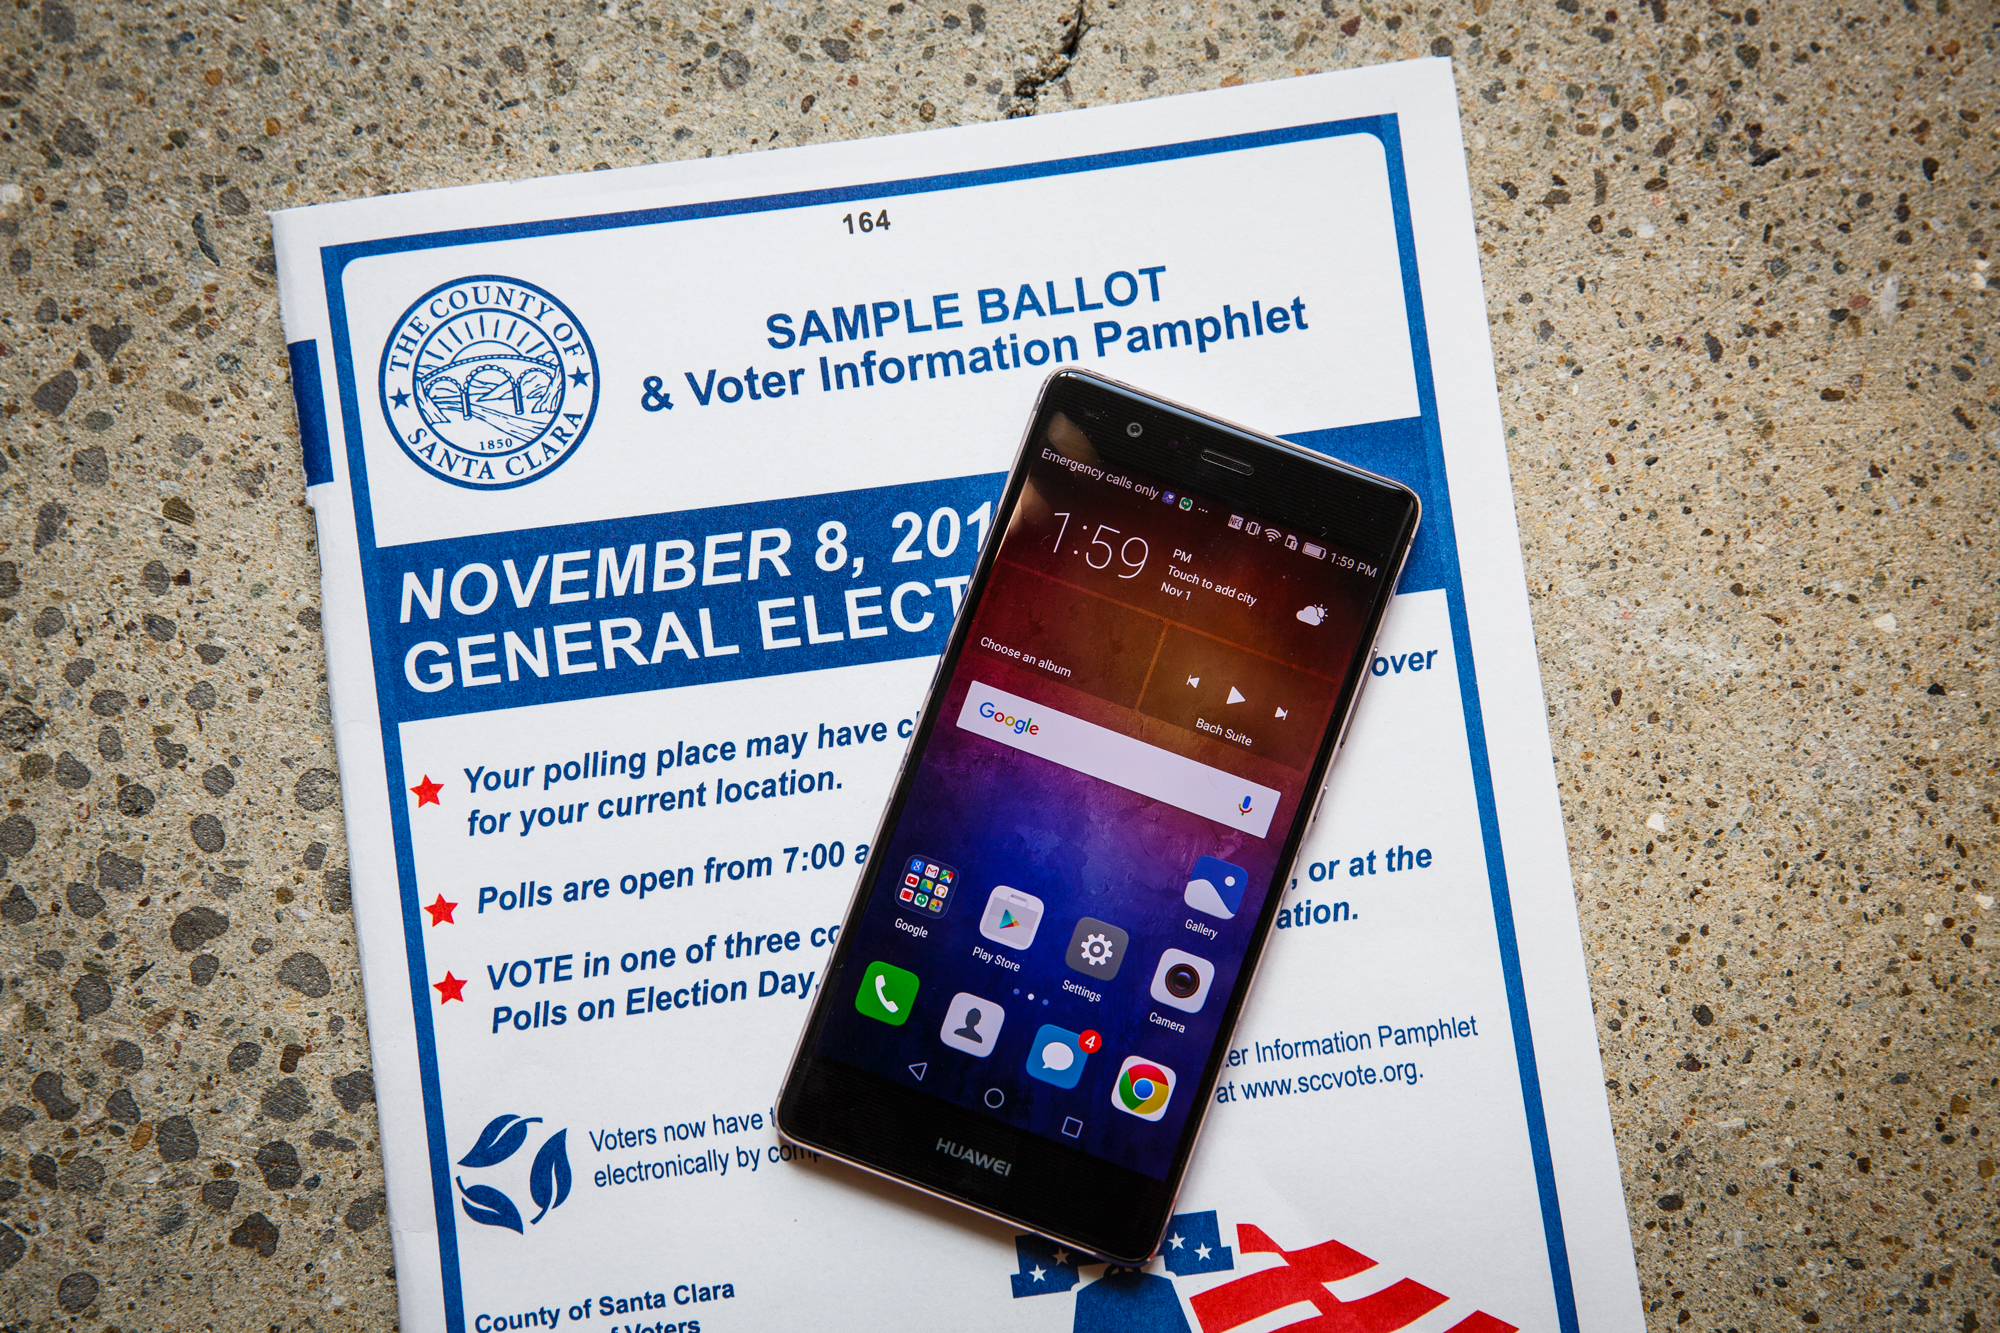 phone-sample-ballot-2286-001.jpg